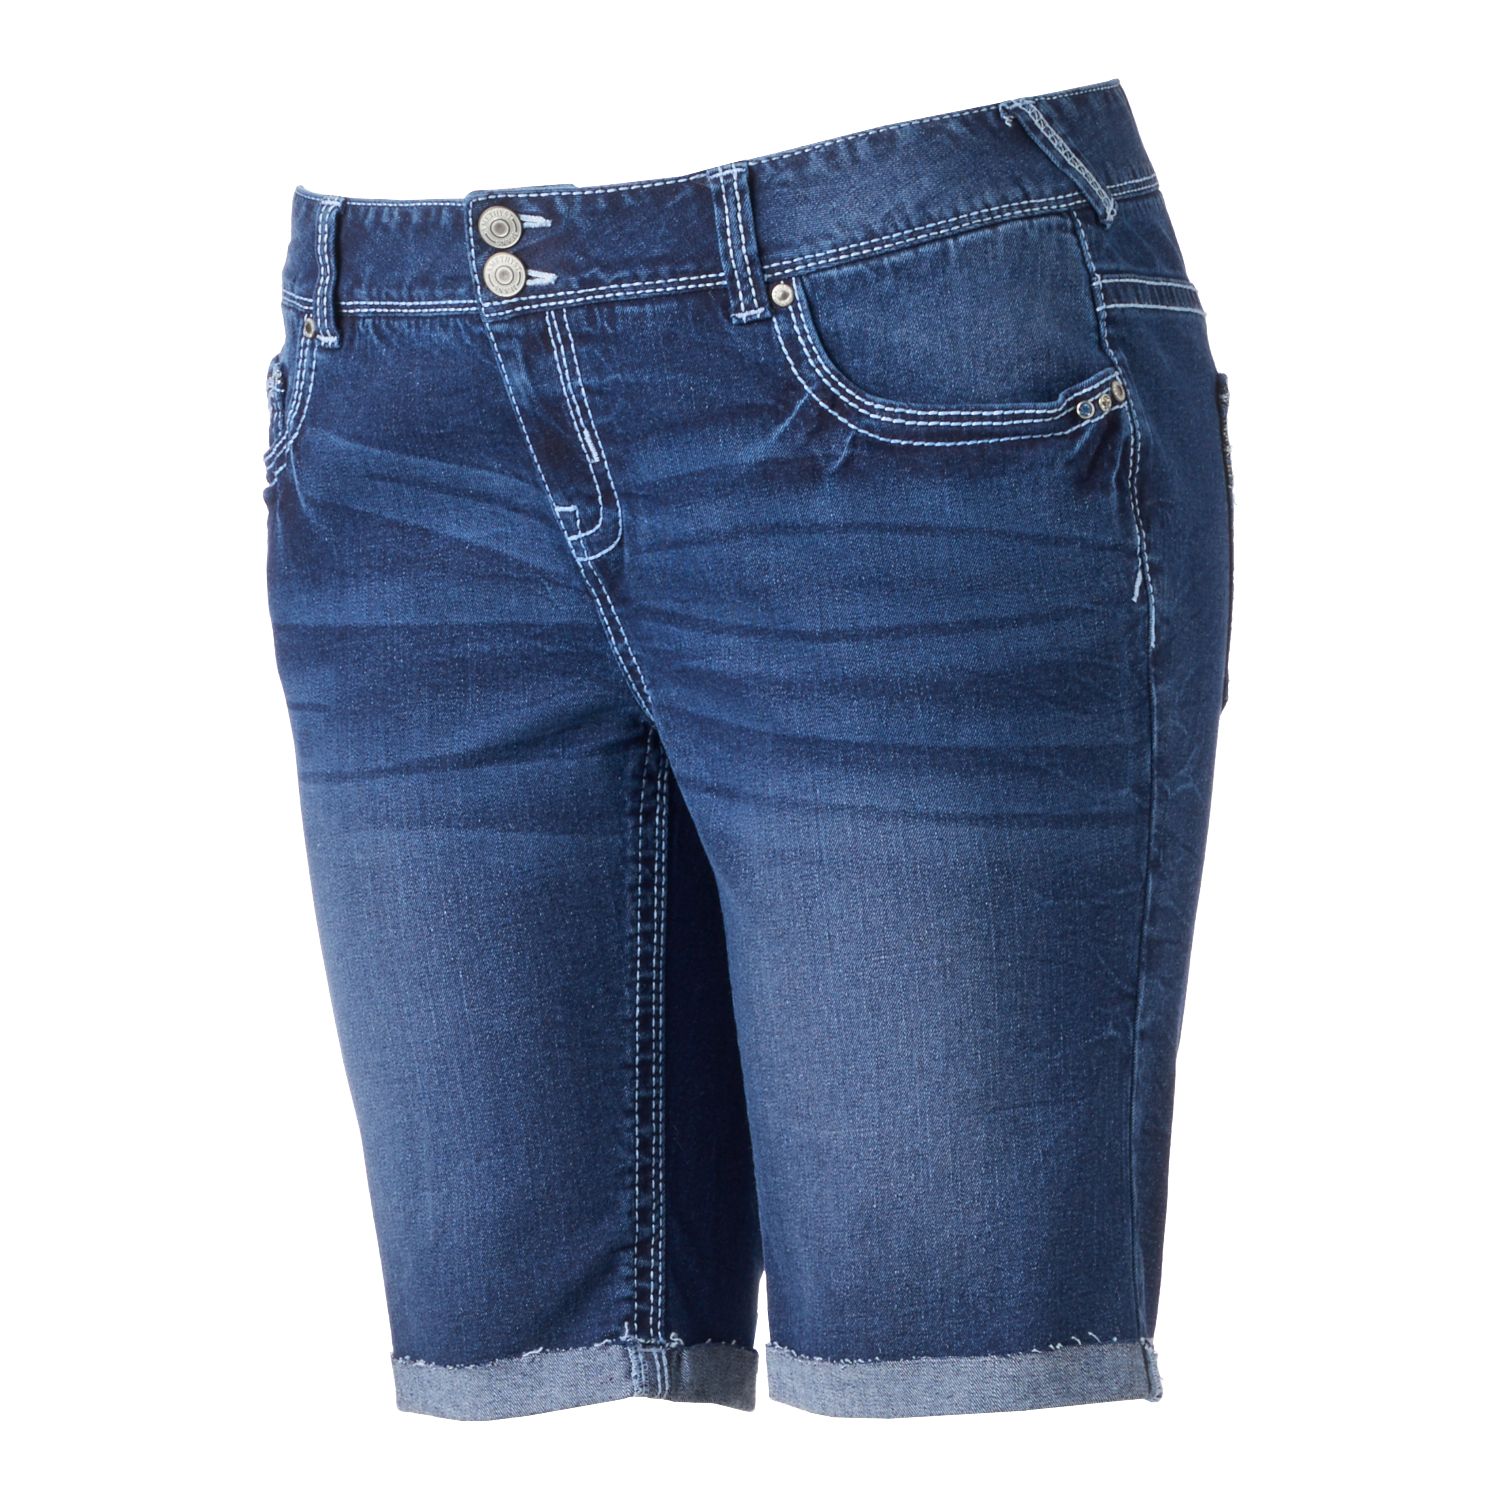 amethyst jean shorts